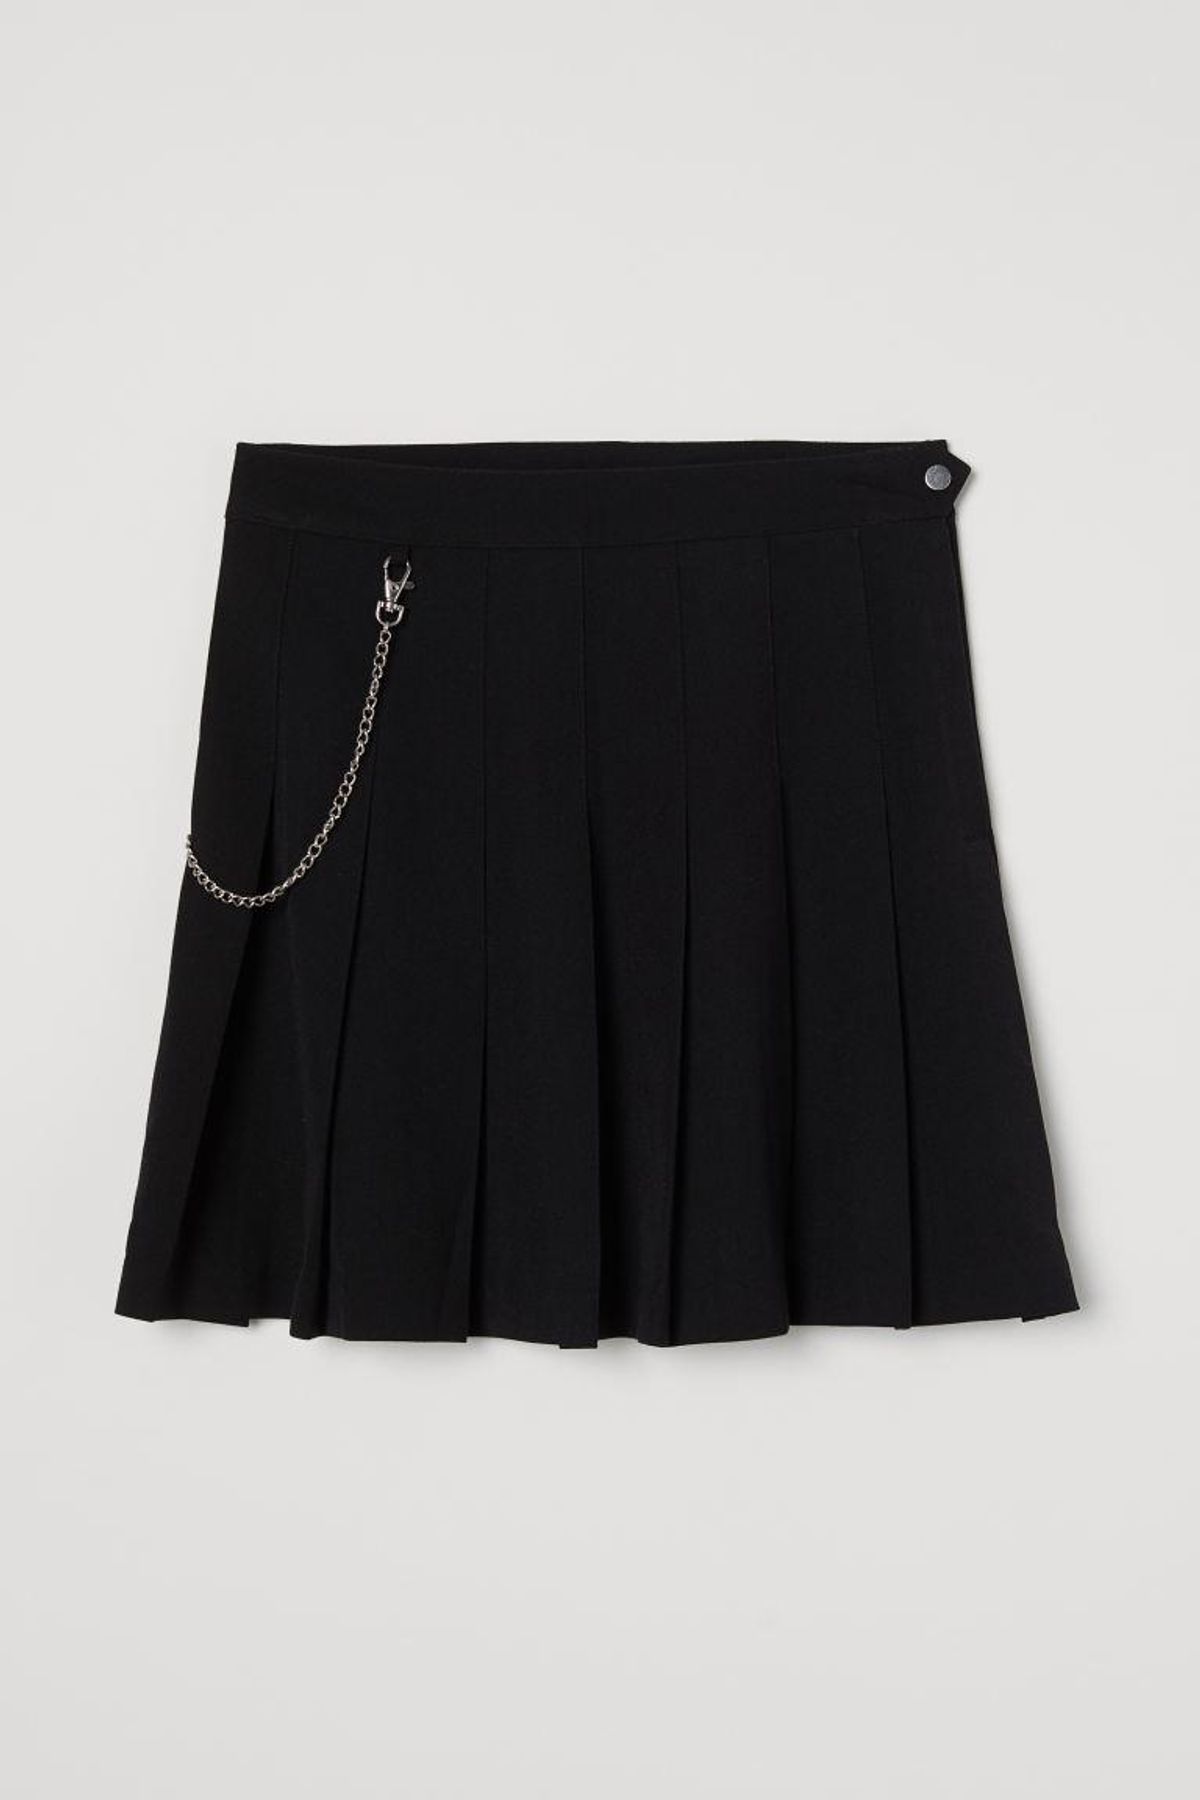 h&m pleated skirt